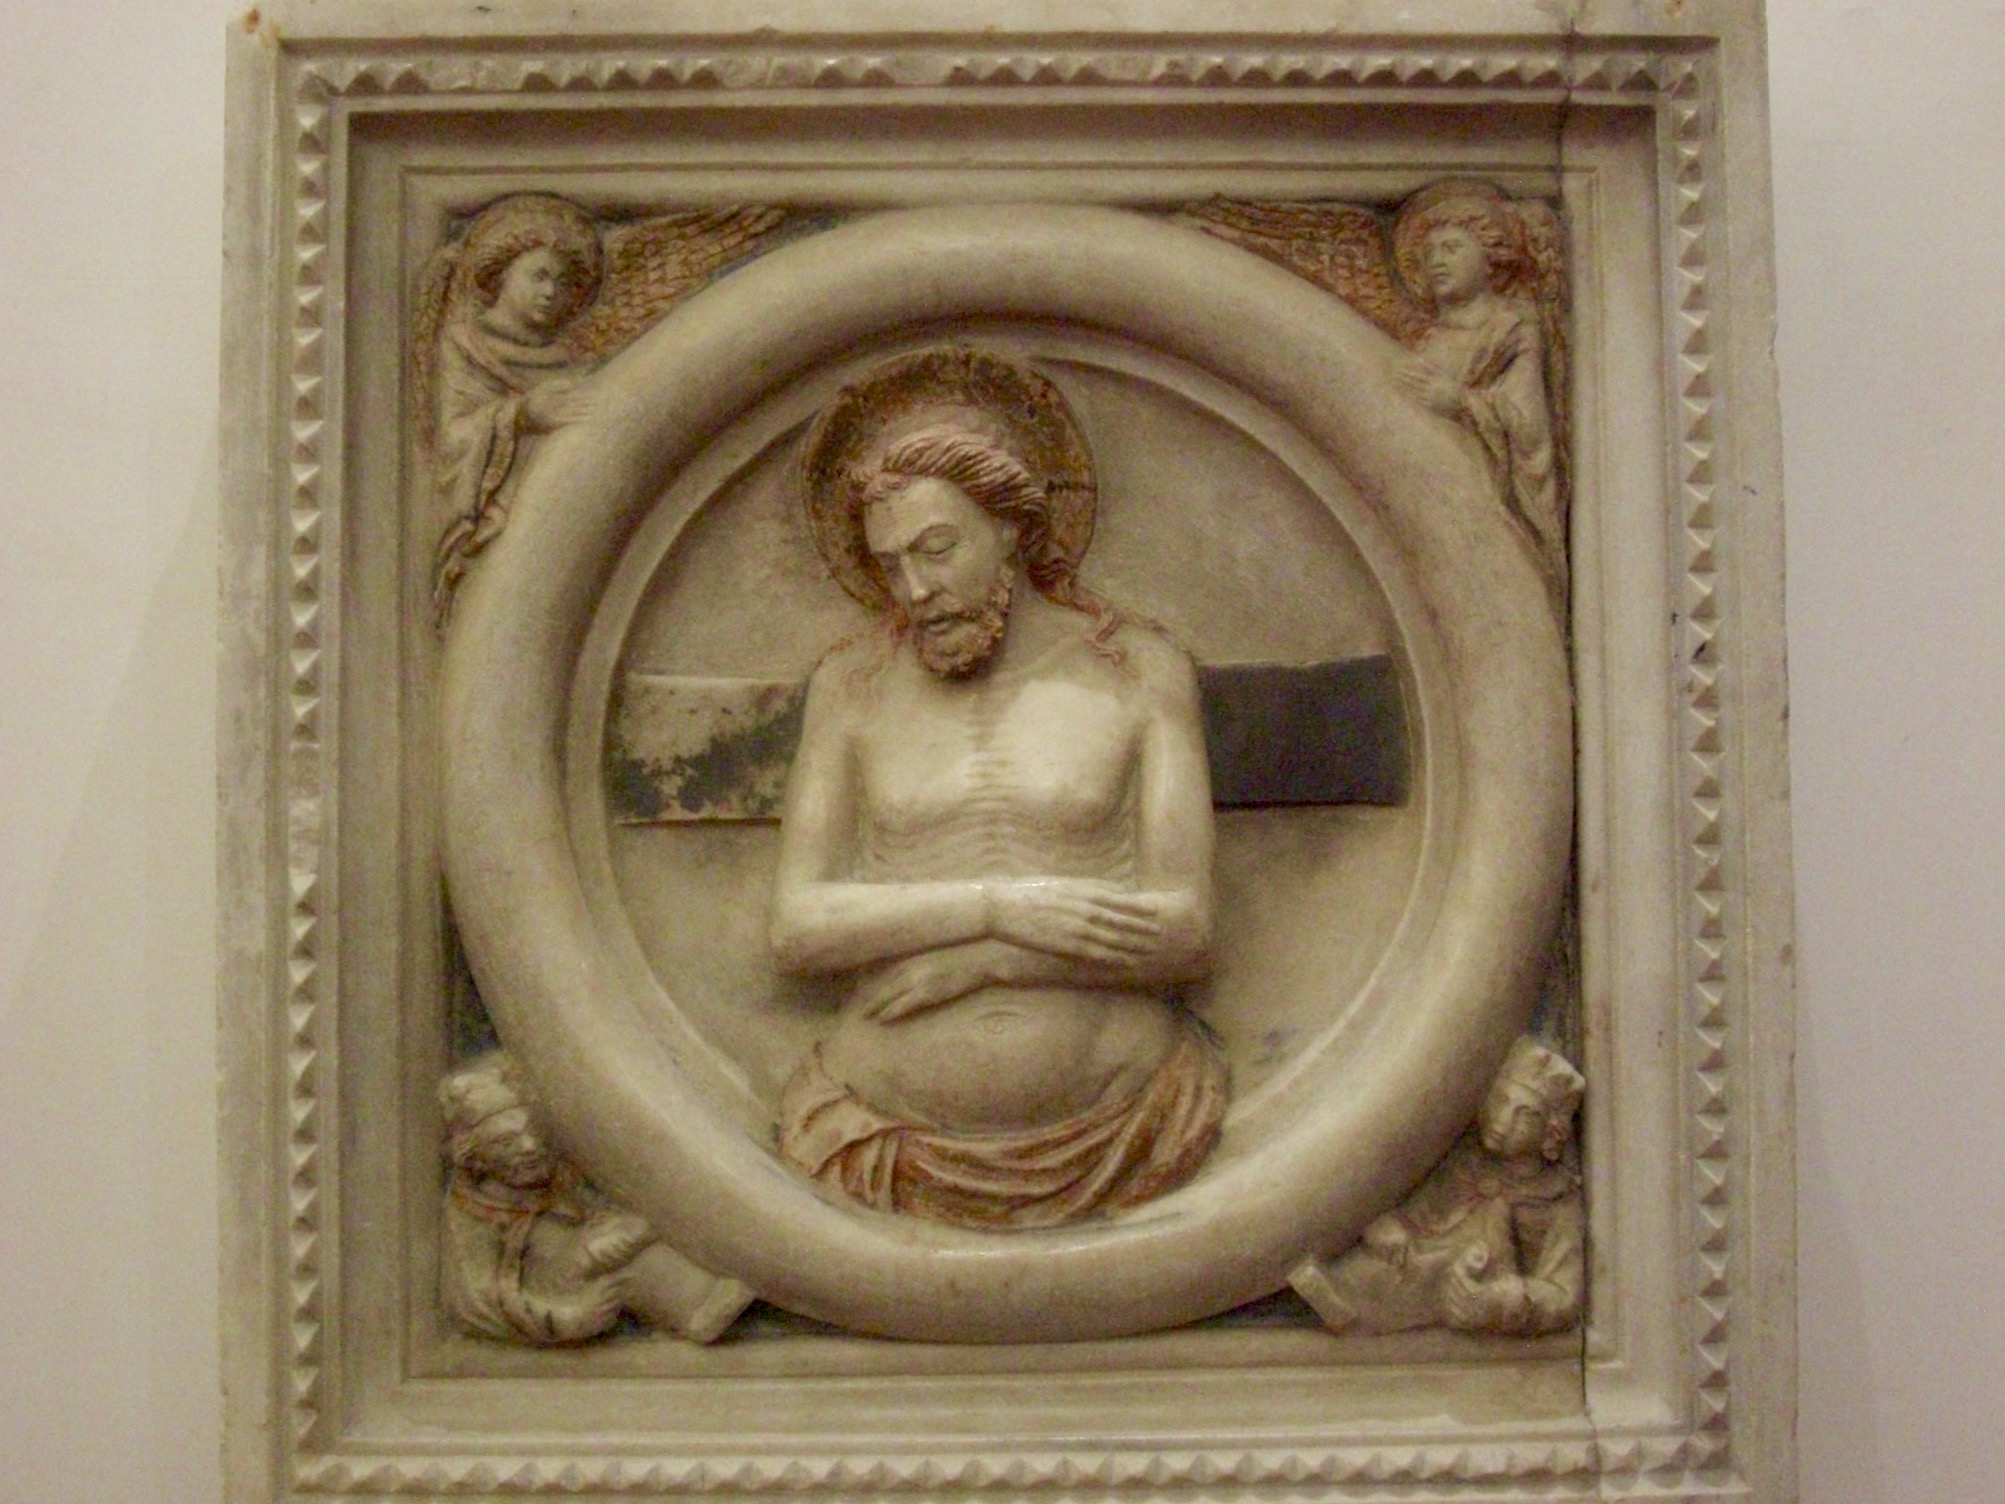 foto: https://upload.wikimedia.org/wikipedia/commons/7/78/Museo_della_Citt%C3%A0-Arte_medievale.jpg